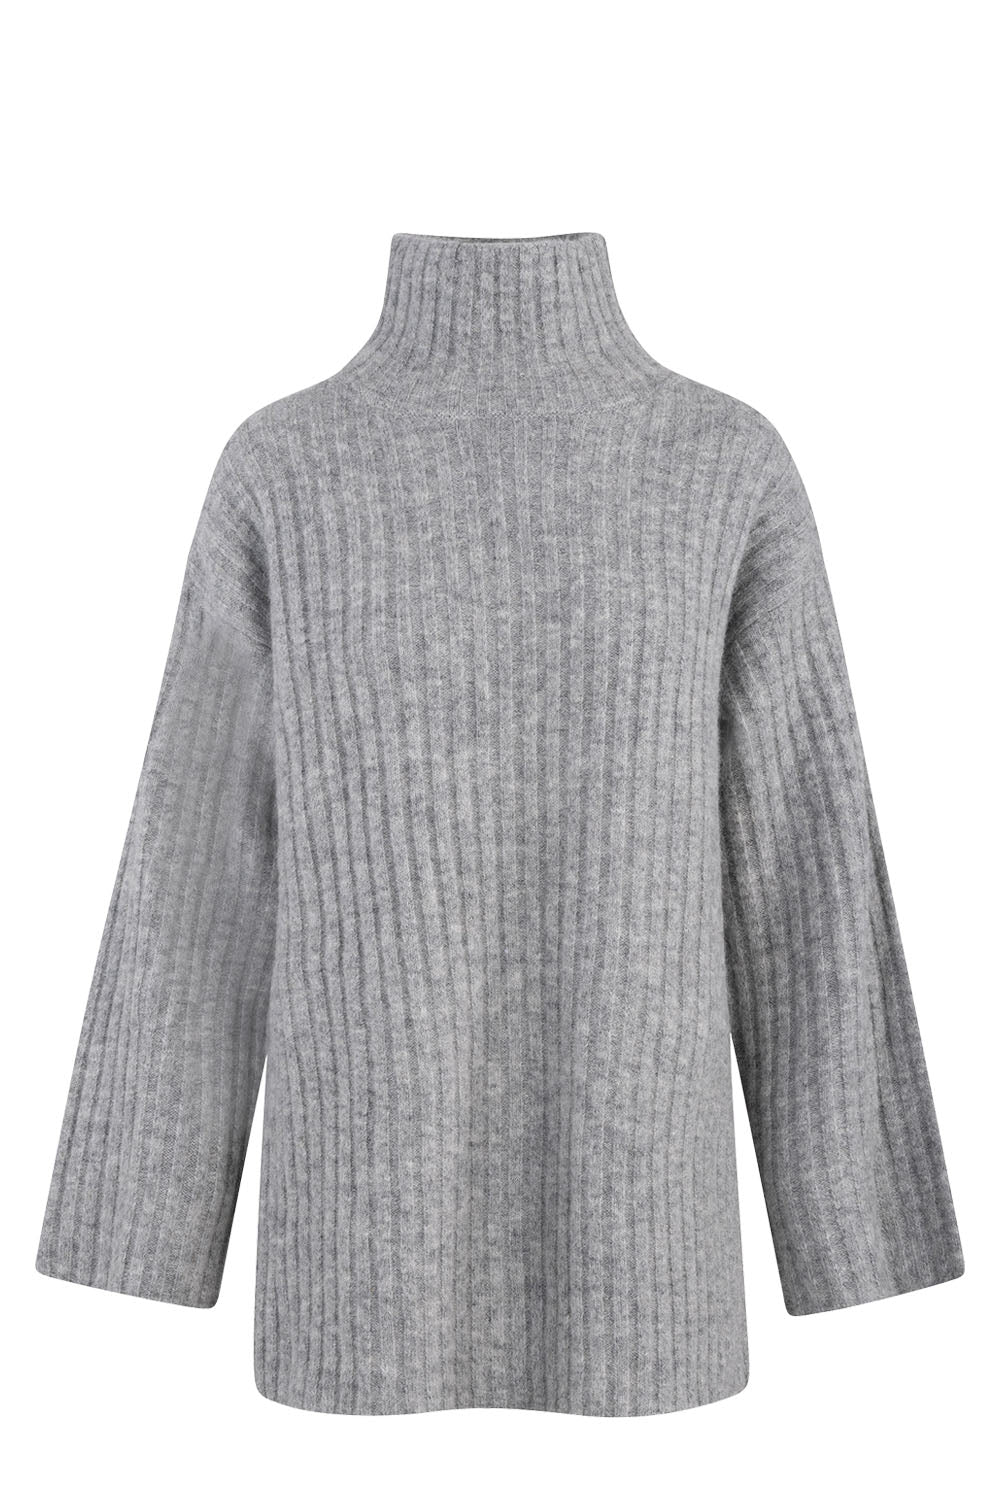 Vanya Sweater Grey Melange